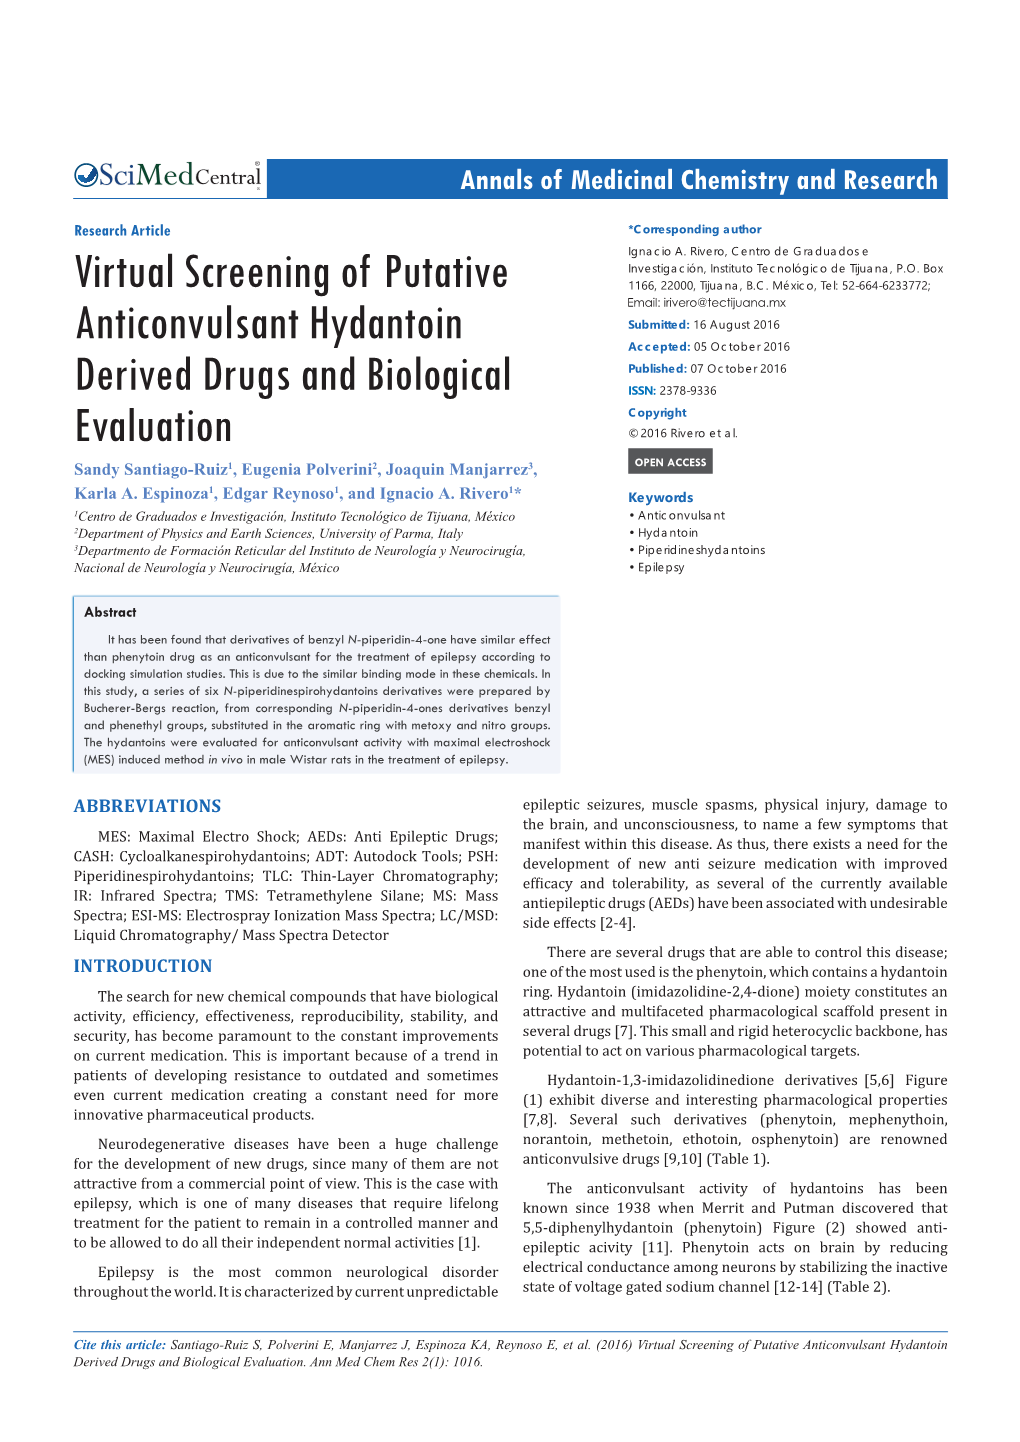 Virtual Screening of Putative Anticonvulsant Hydantoin Derived Drugs and Biological Evaluation